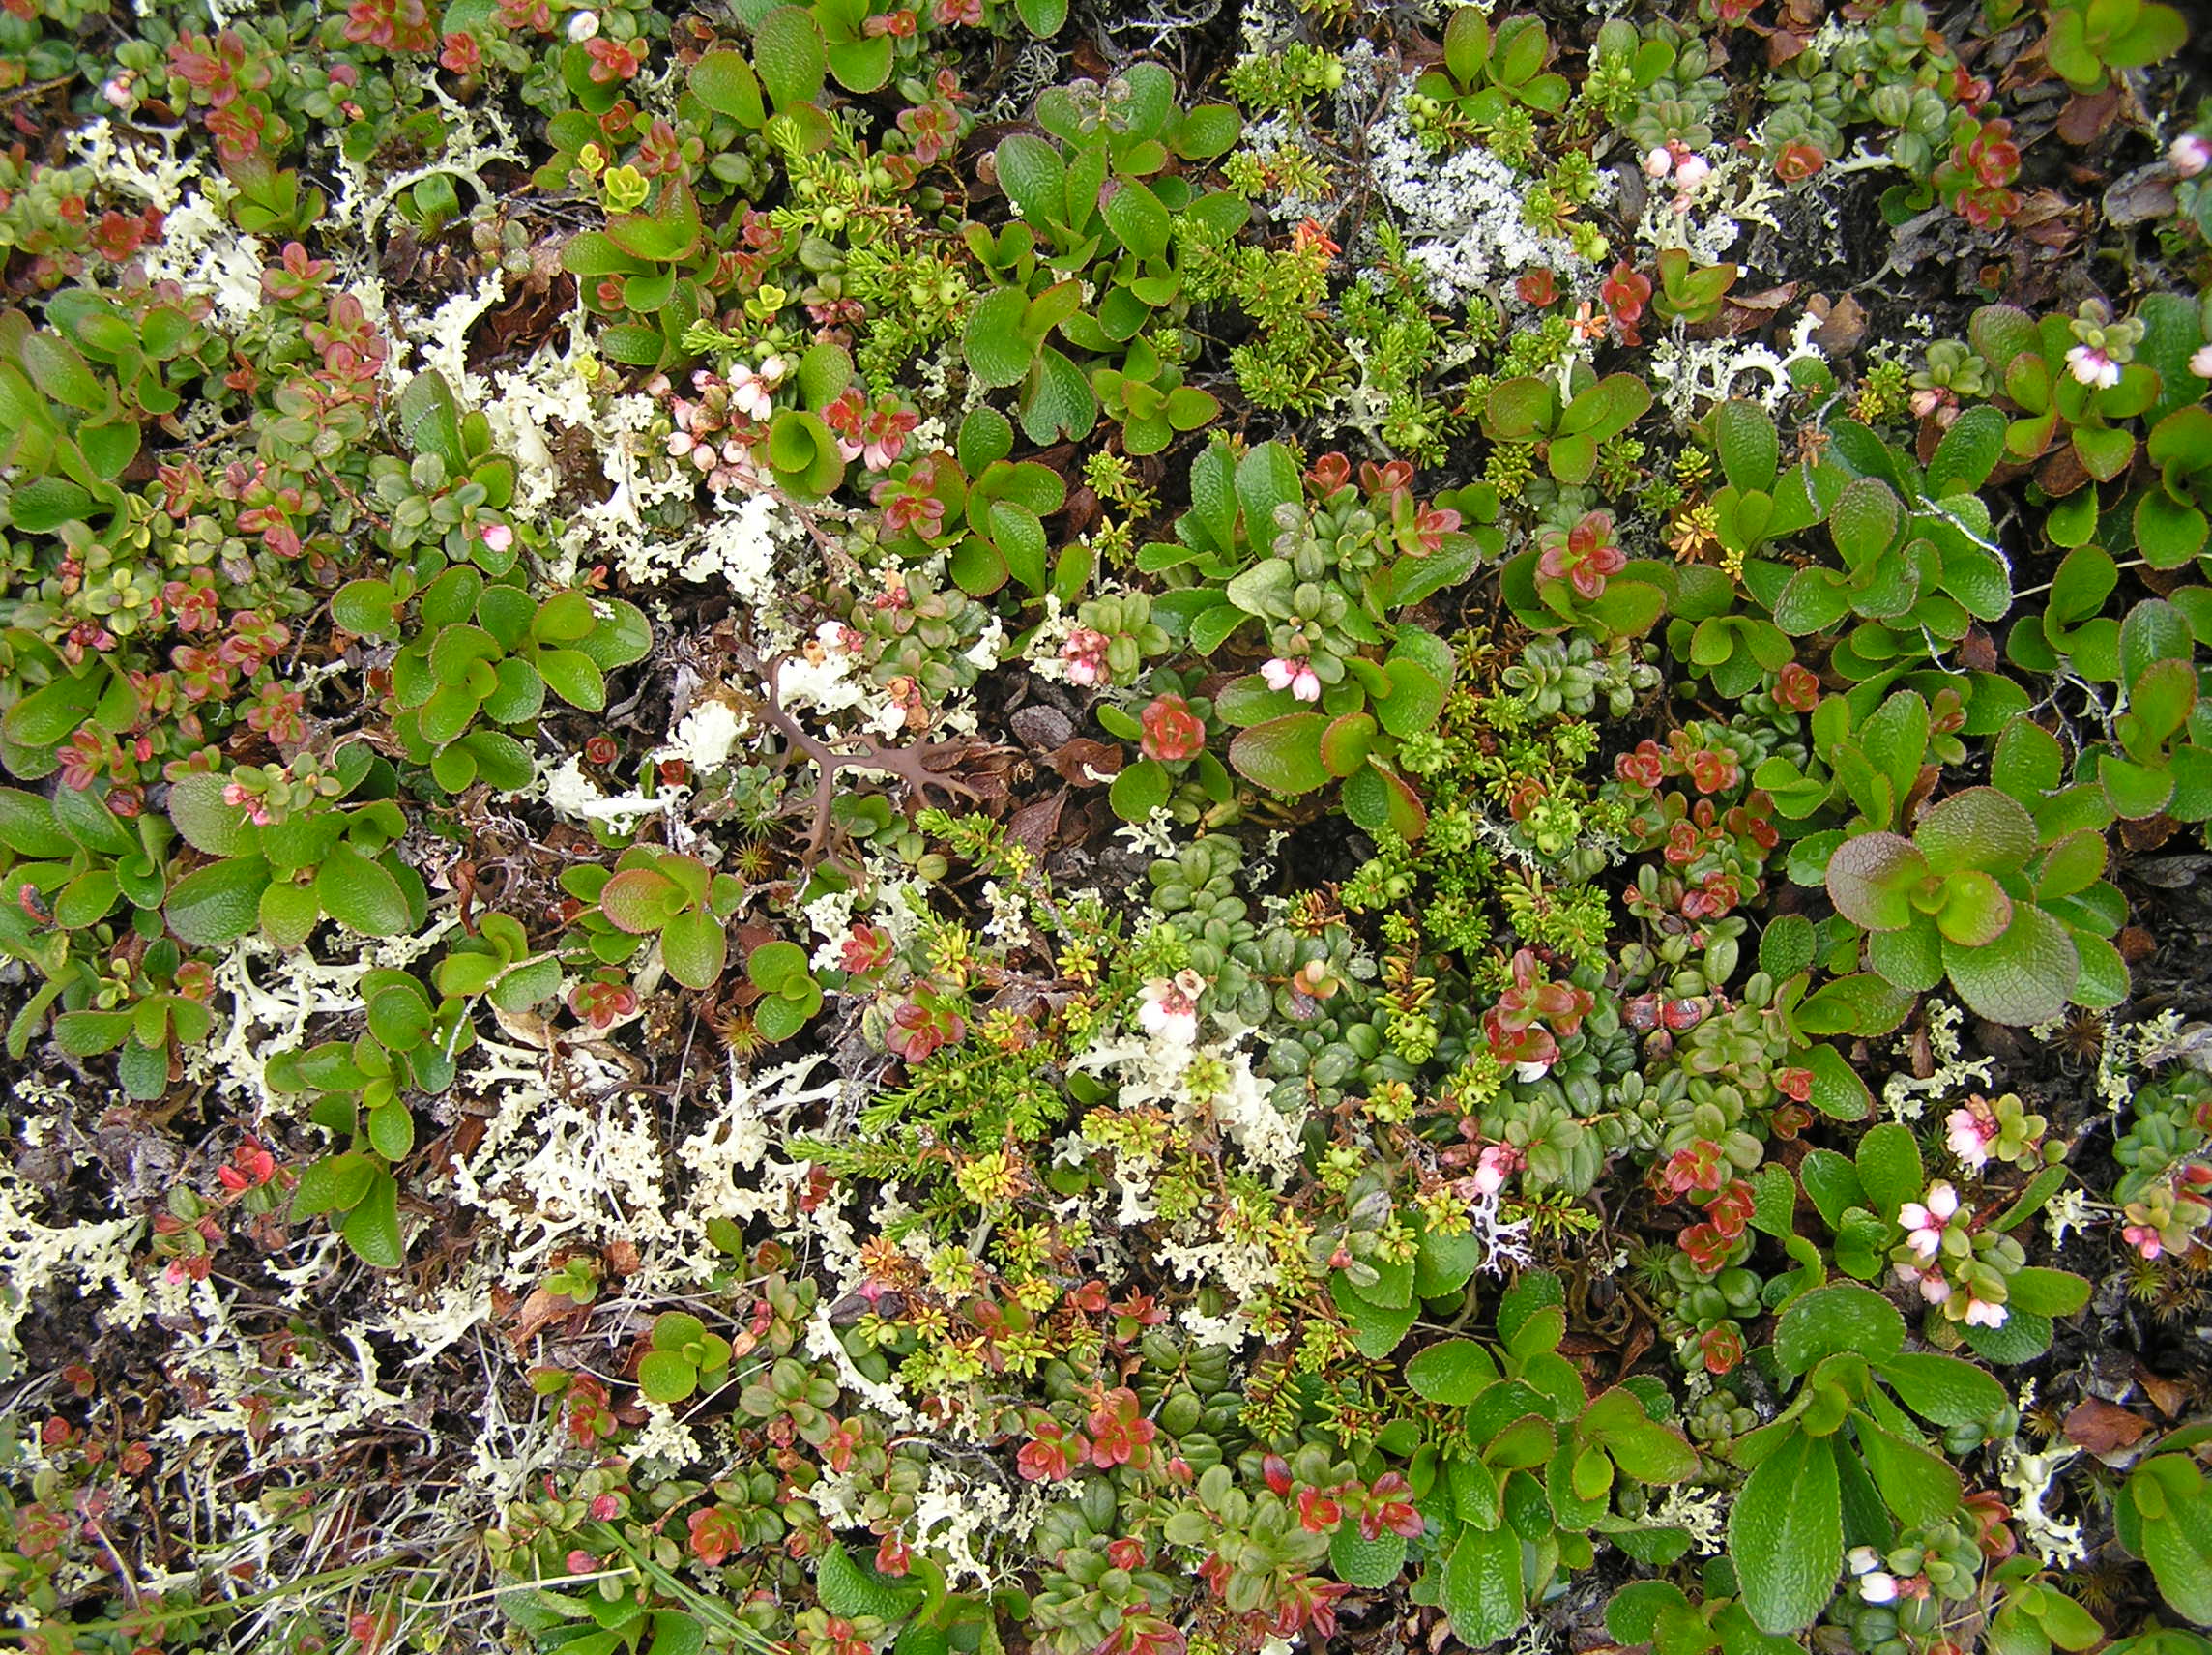 Tundra vegetation